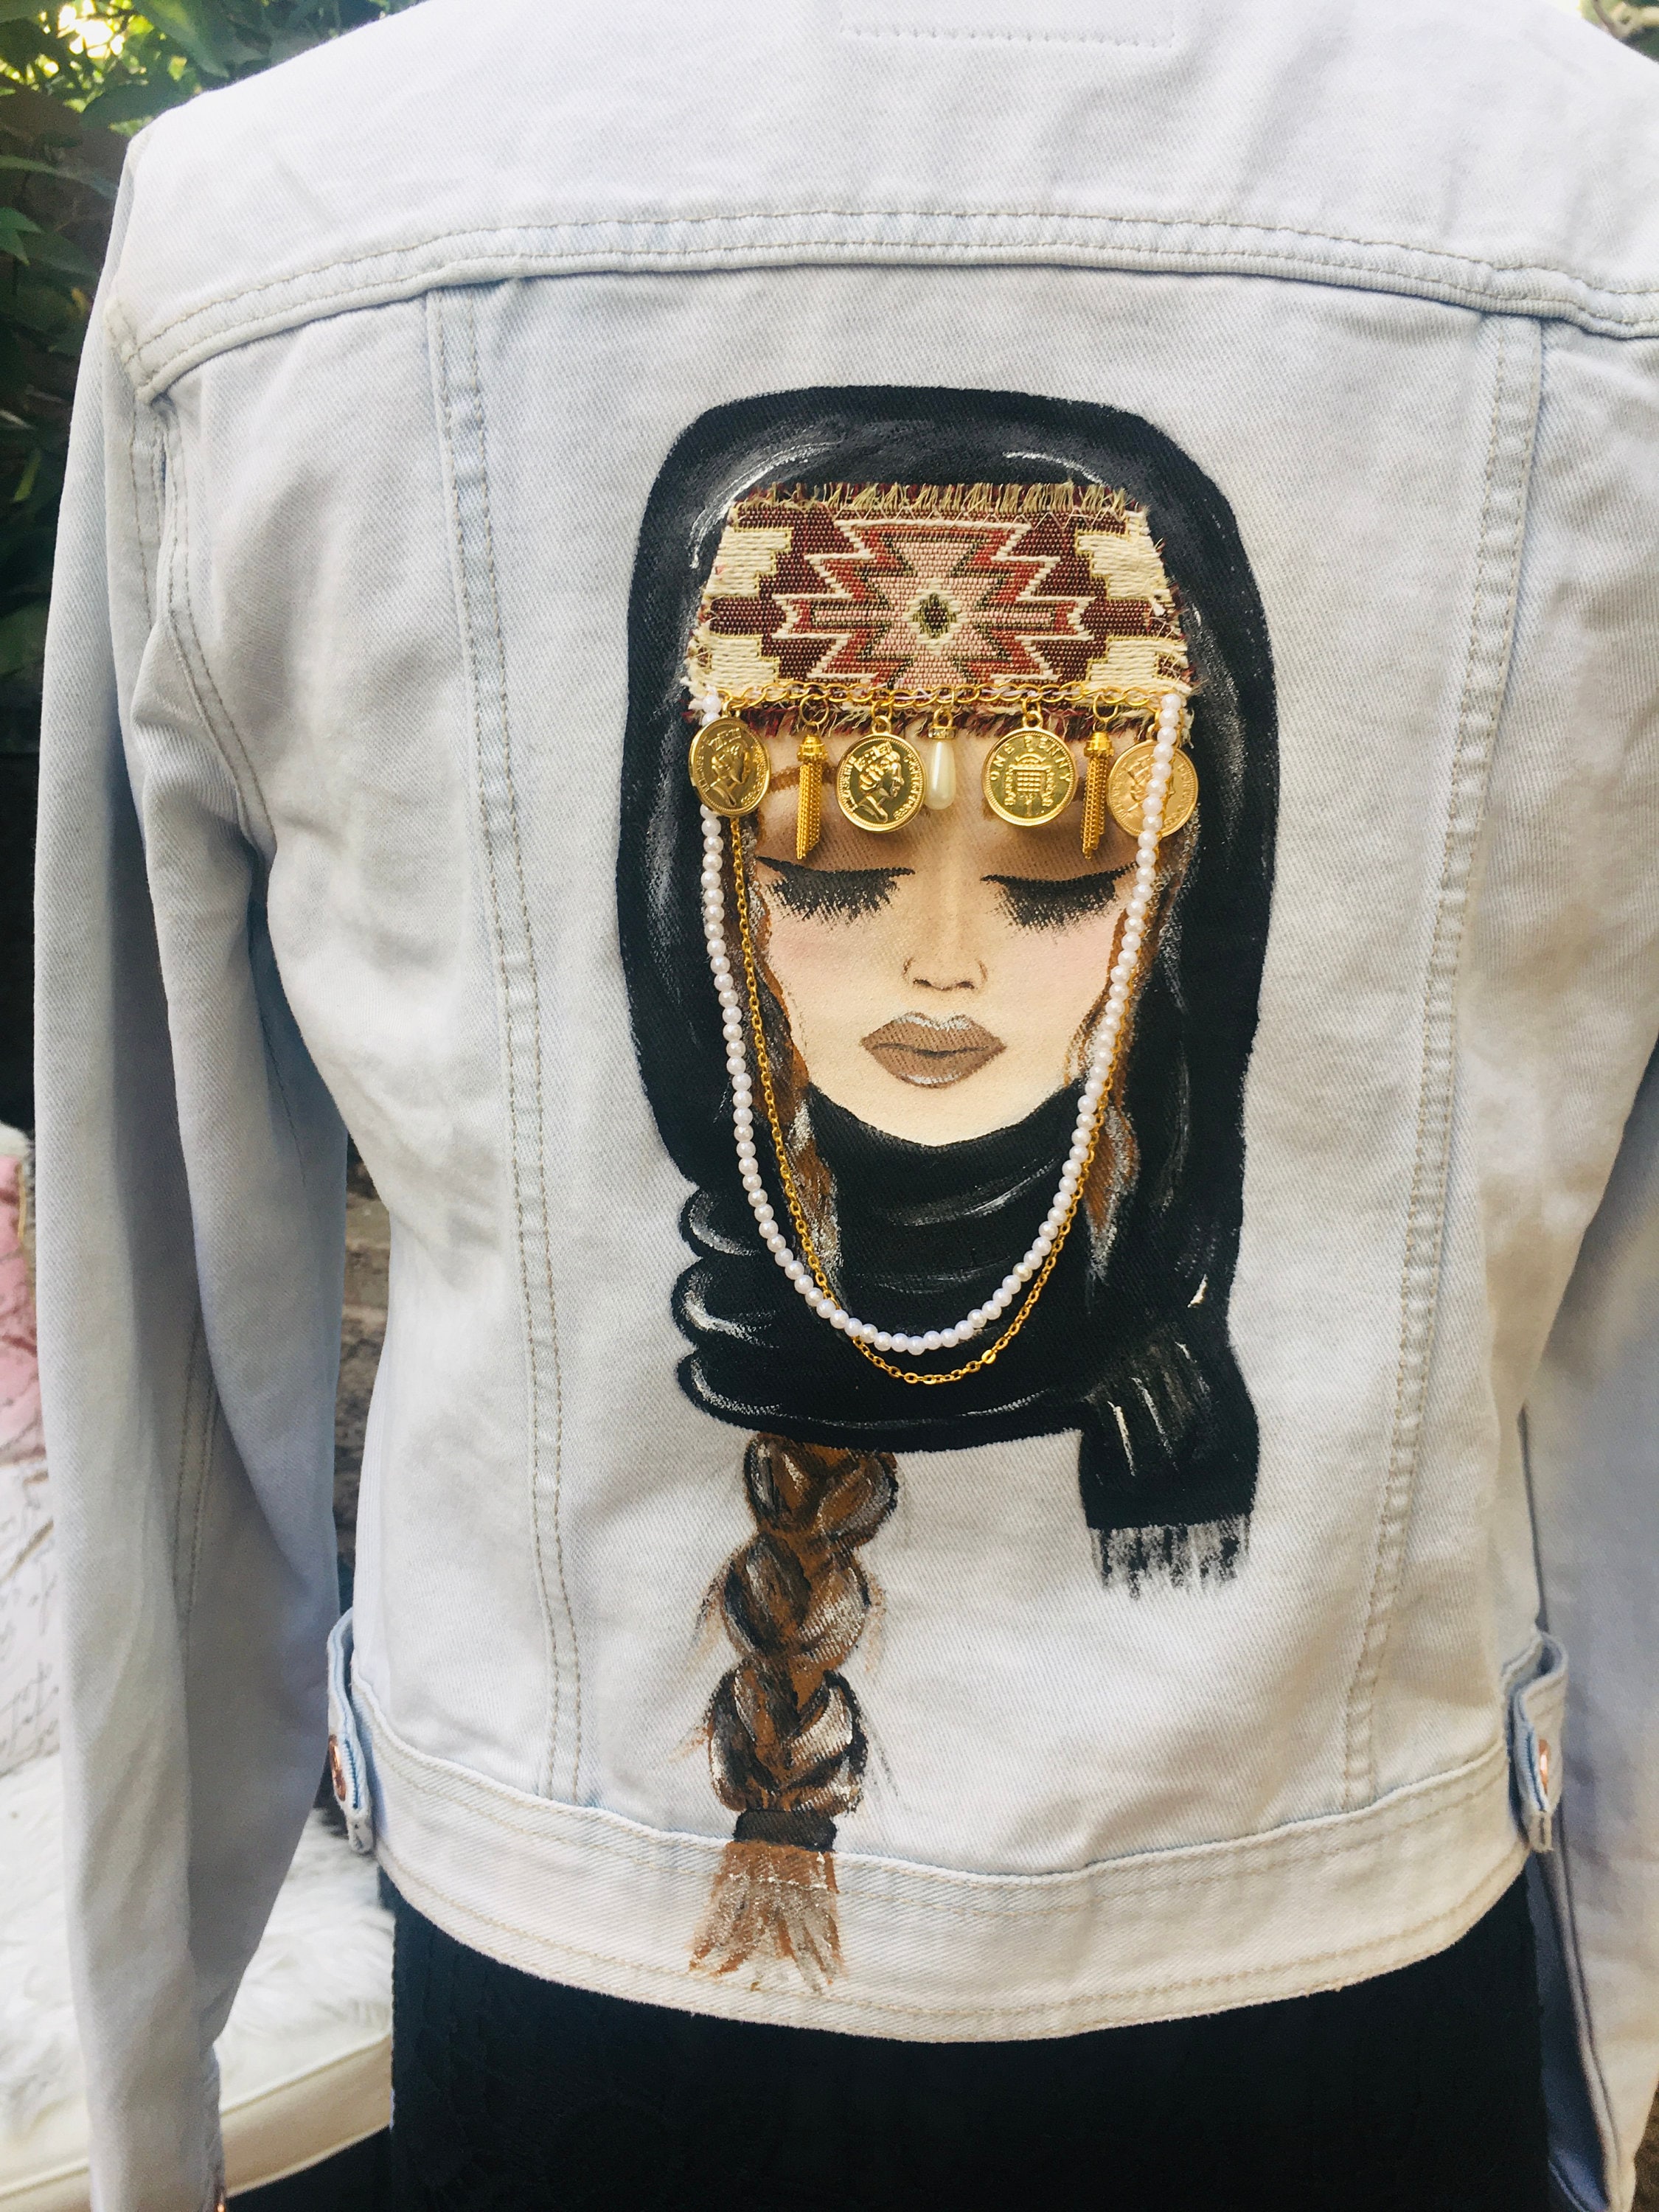 Armenian Traditional Women Inspired Hand Painted Denim Jacket